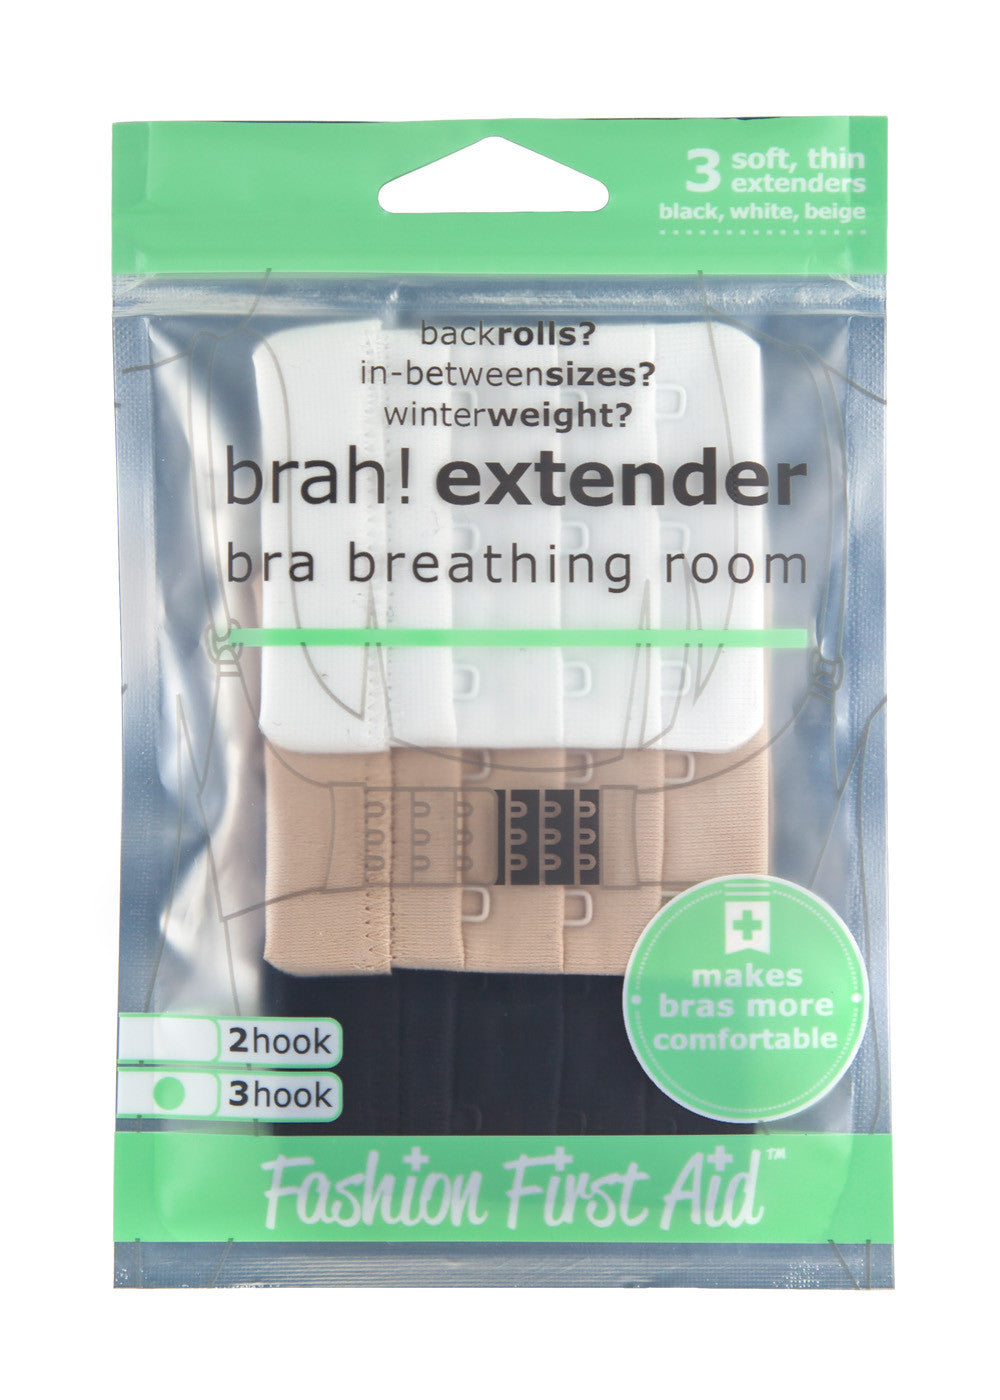 Brah! Extender: Bigger Bra Band Breathing Room - PREGNANCY or IN